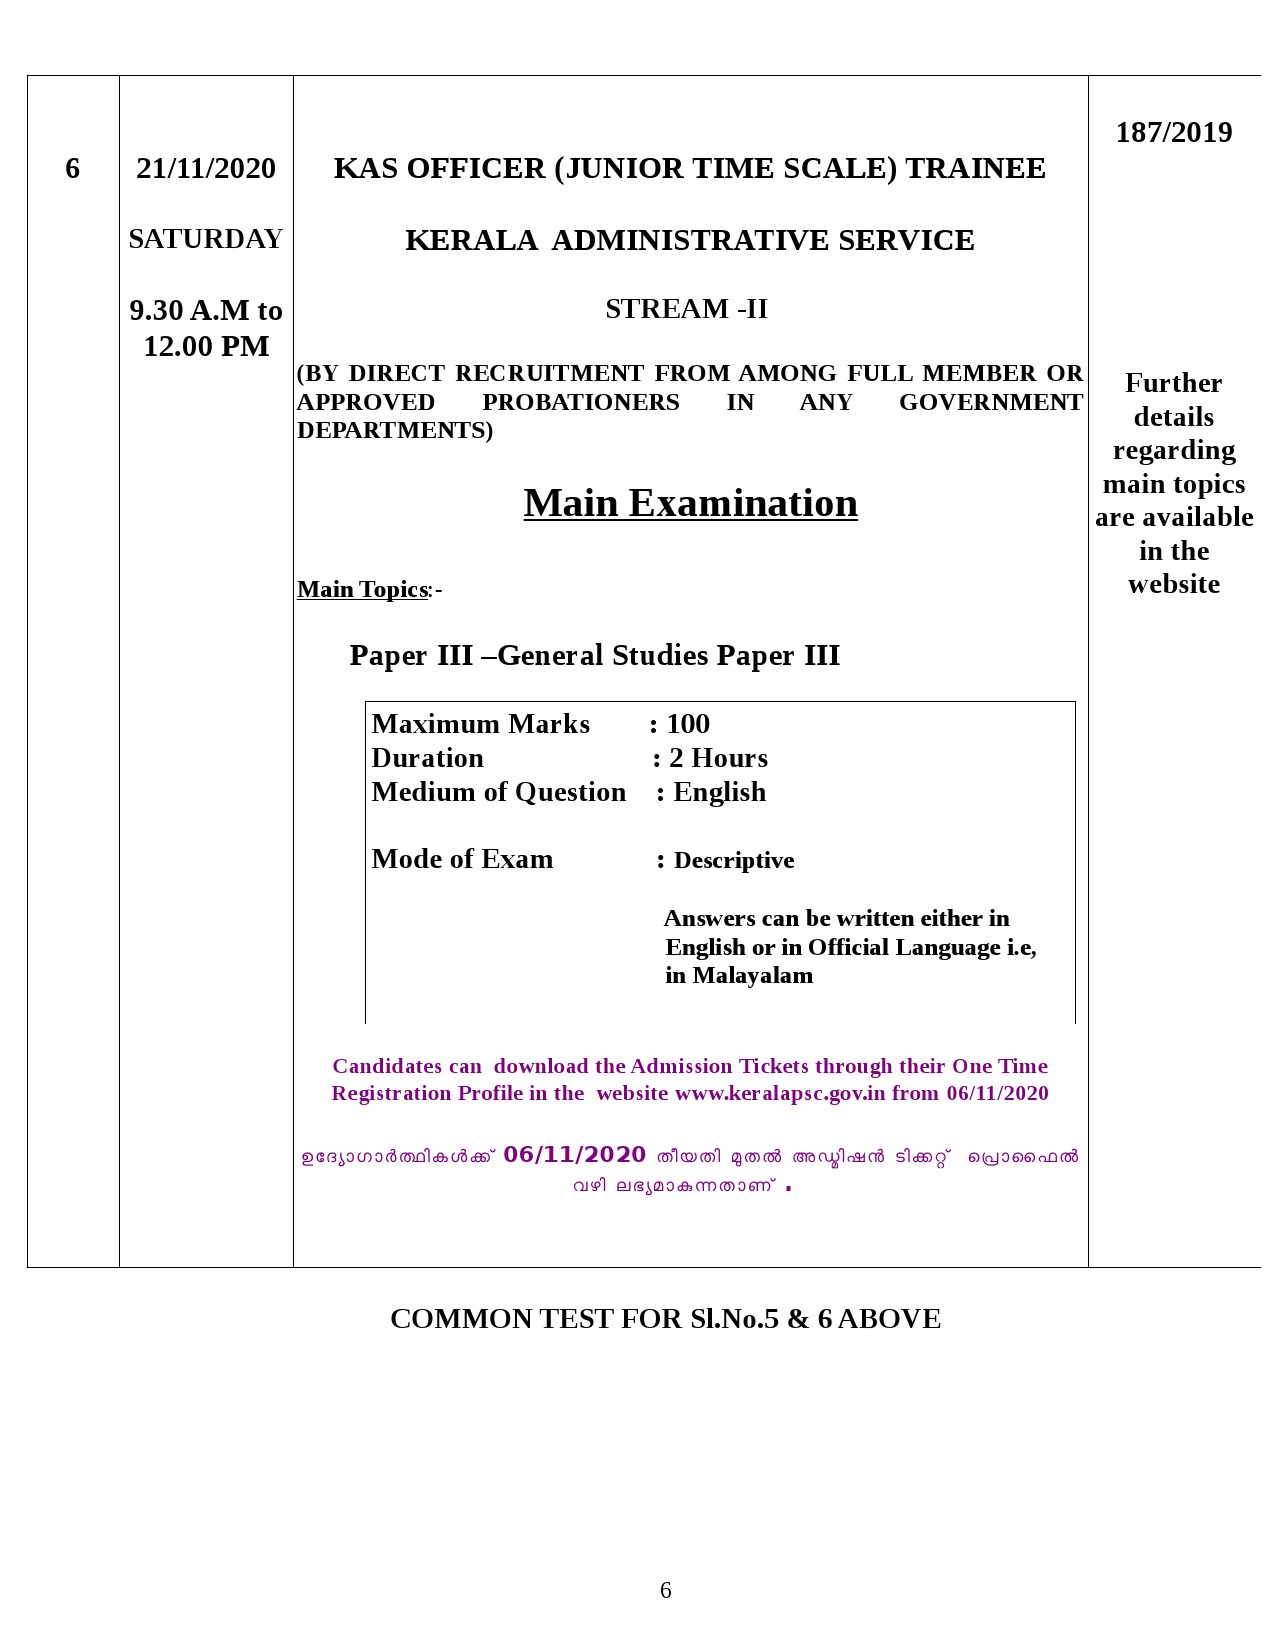 Kerala PSC Additional Exam for November 2020 - Notification Image 6